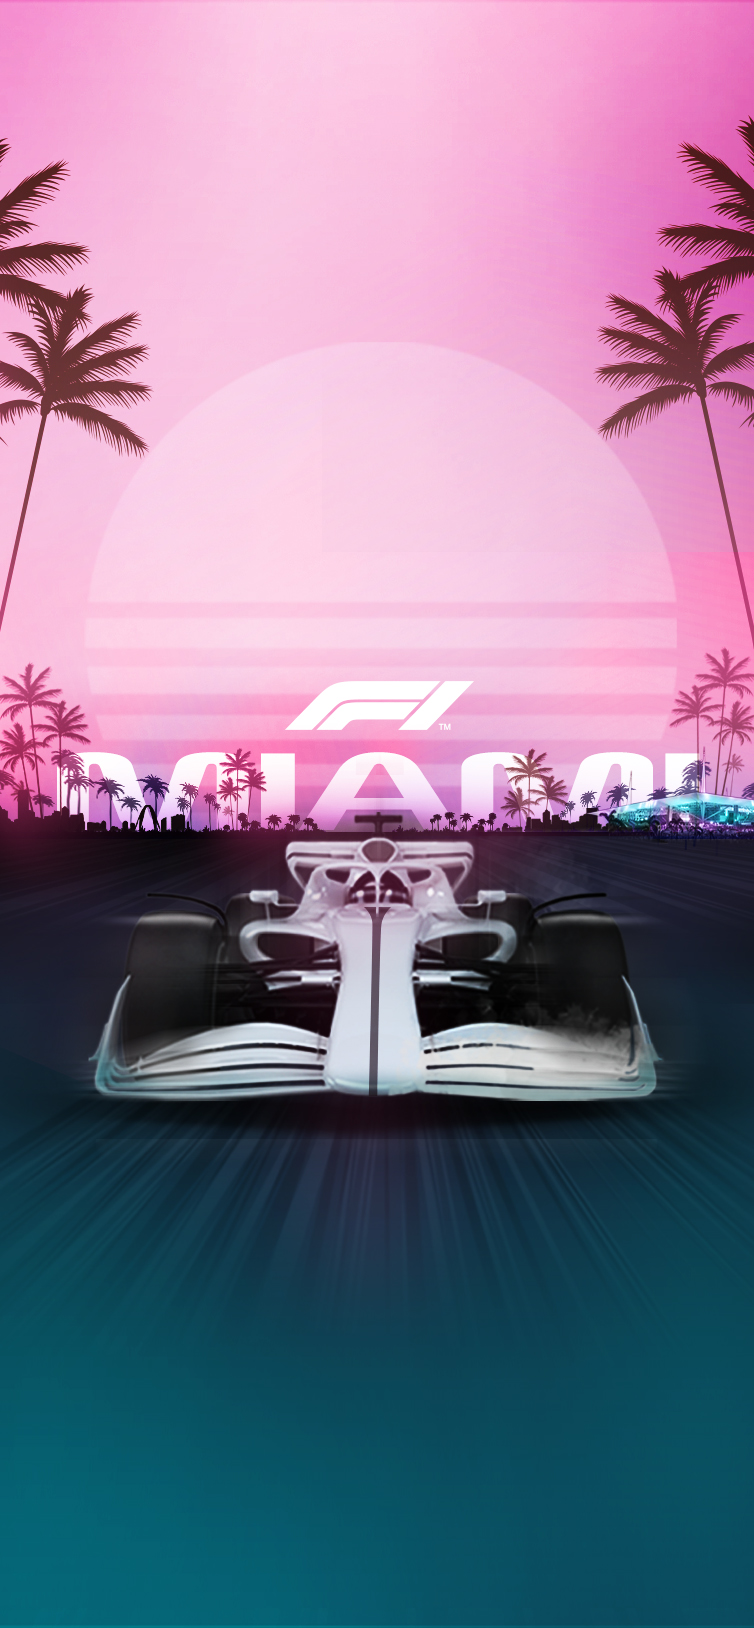 Mark Miami's first Grand Prix with a downloadable wallpaper. Formula 1®